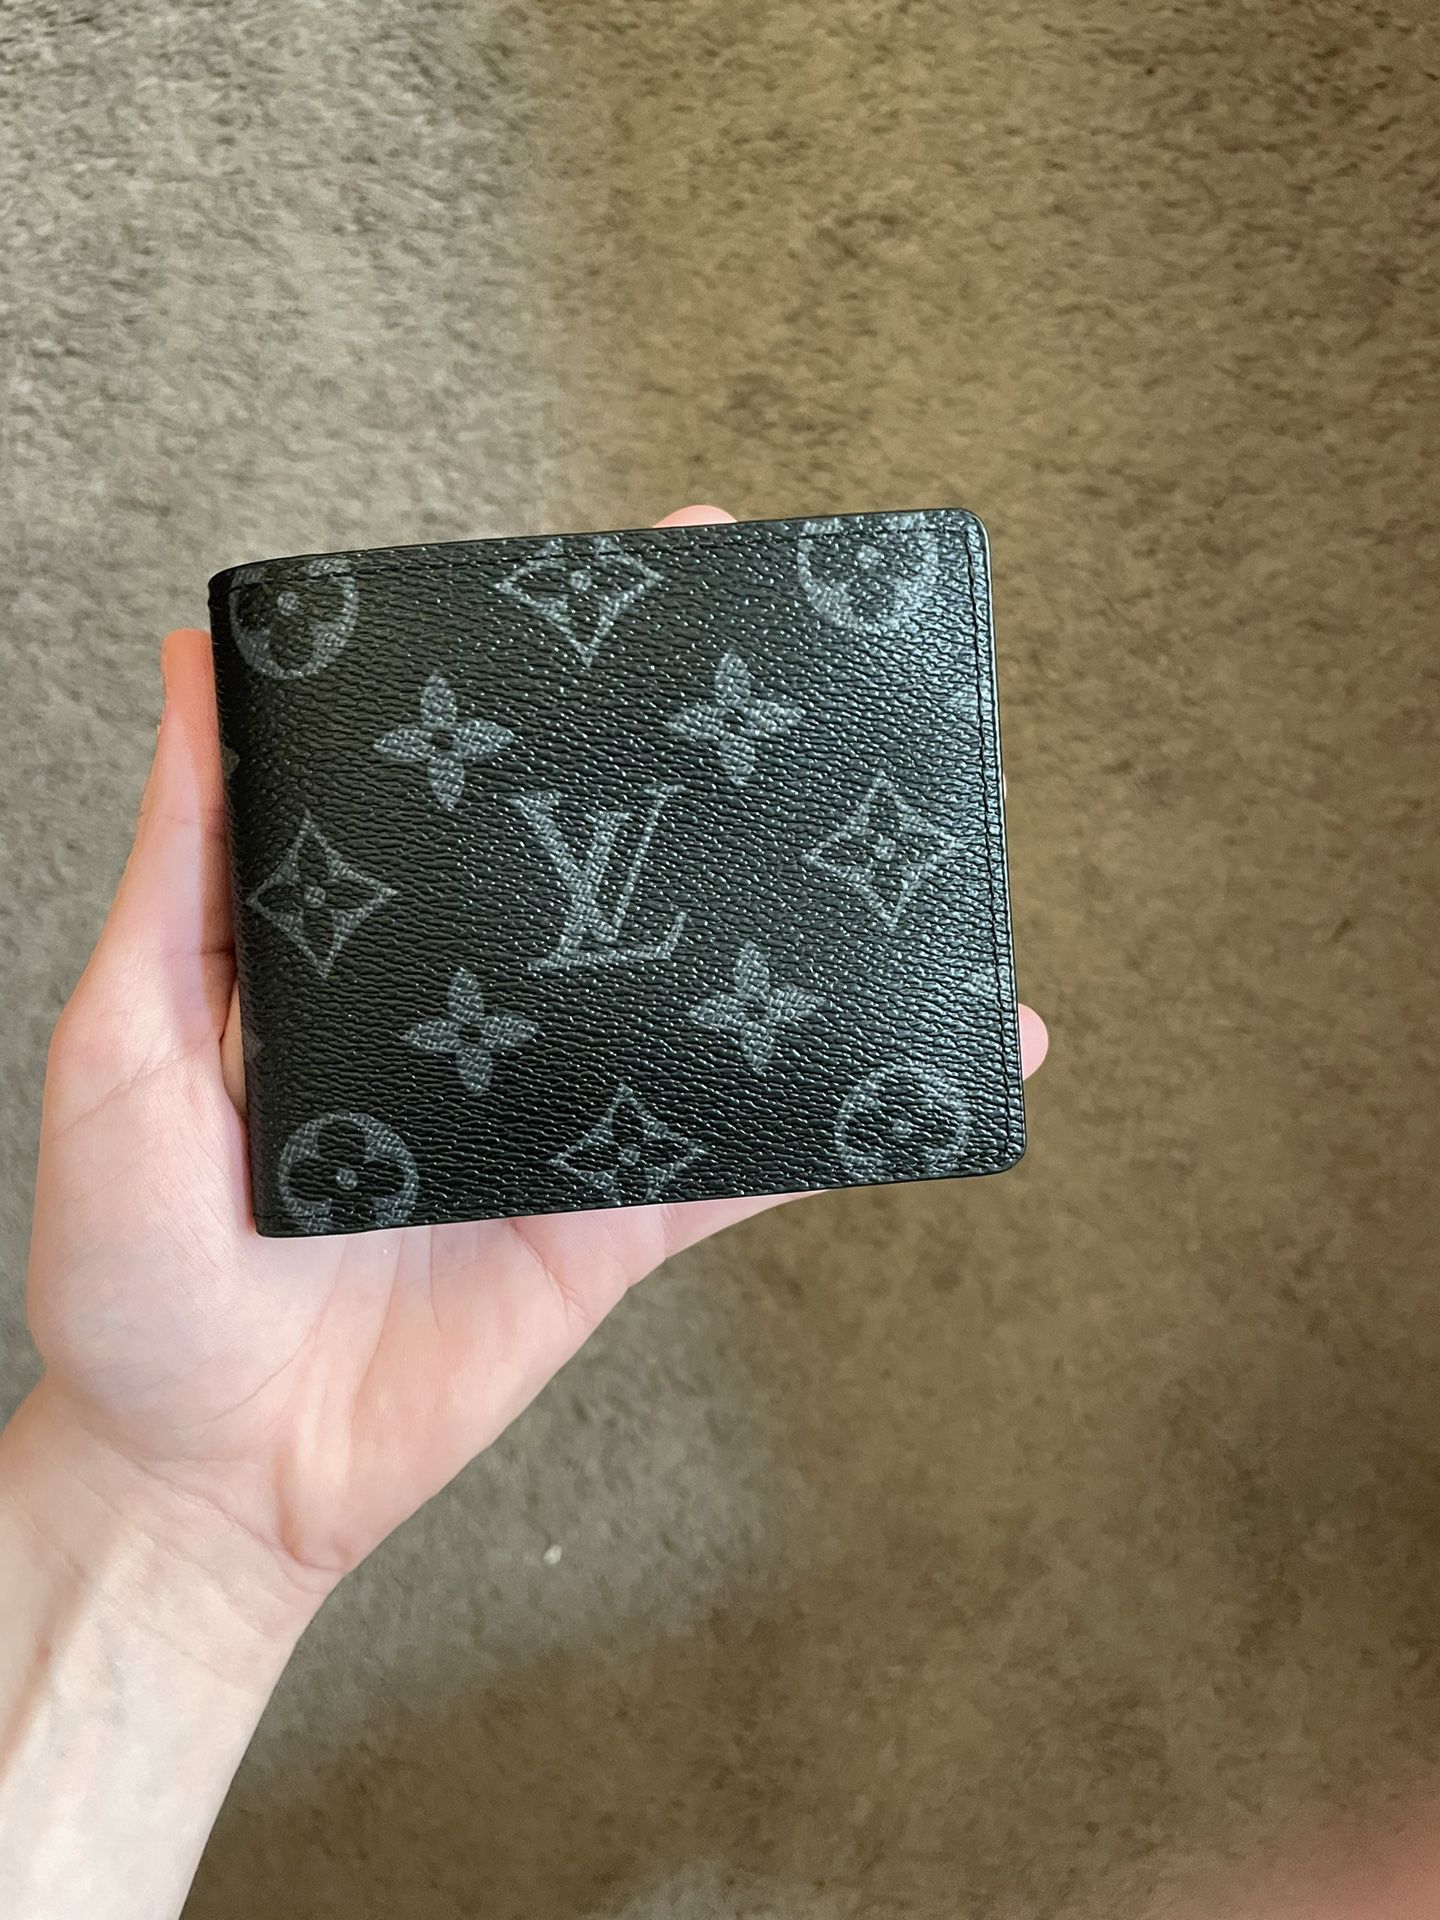 Louis Vuitton Monogram Black Wallet - Box Included